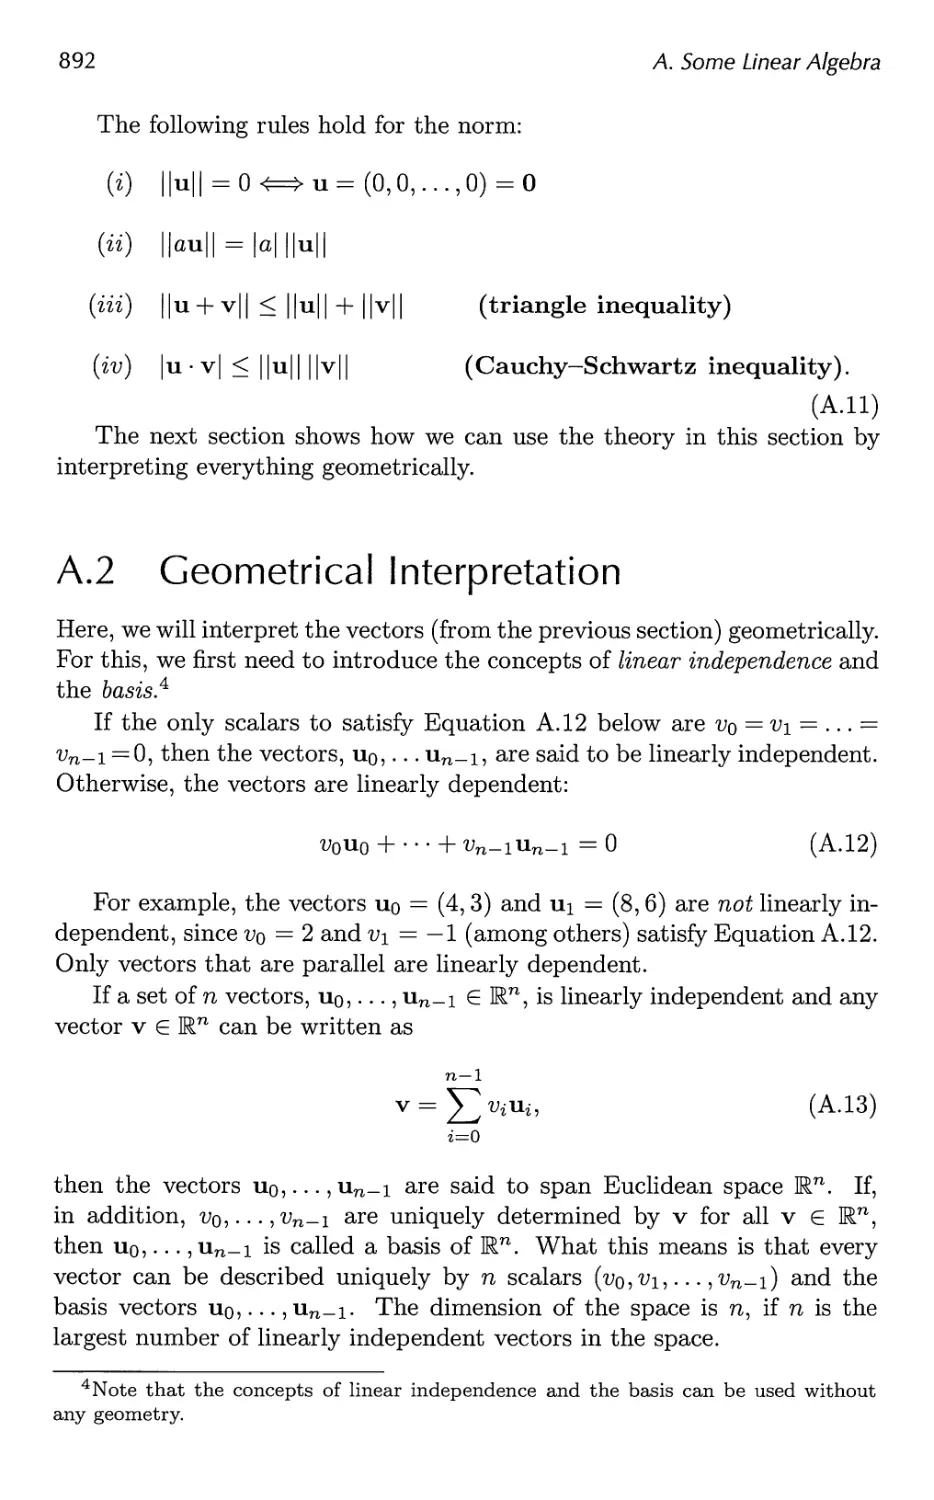 A.2 Geometrical Interpretation